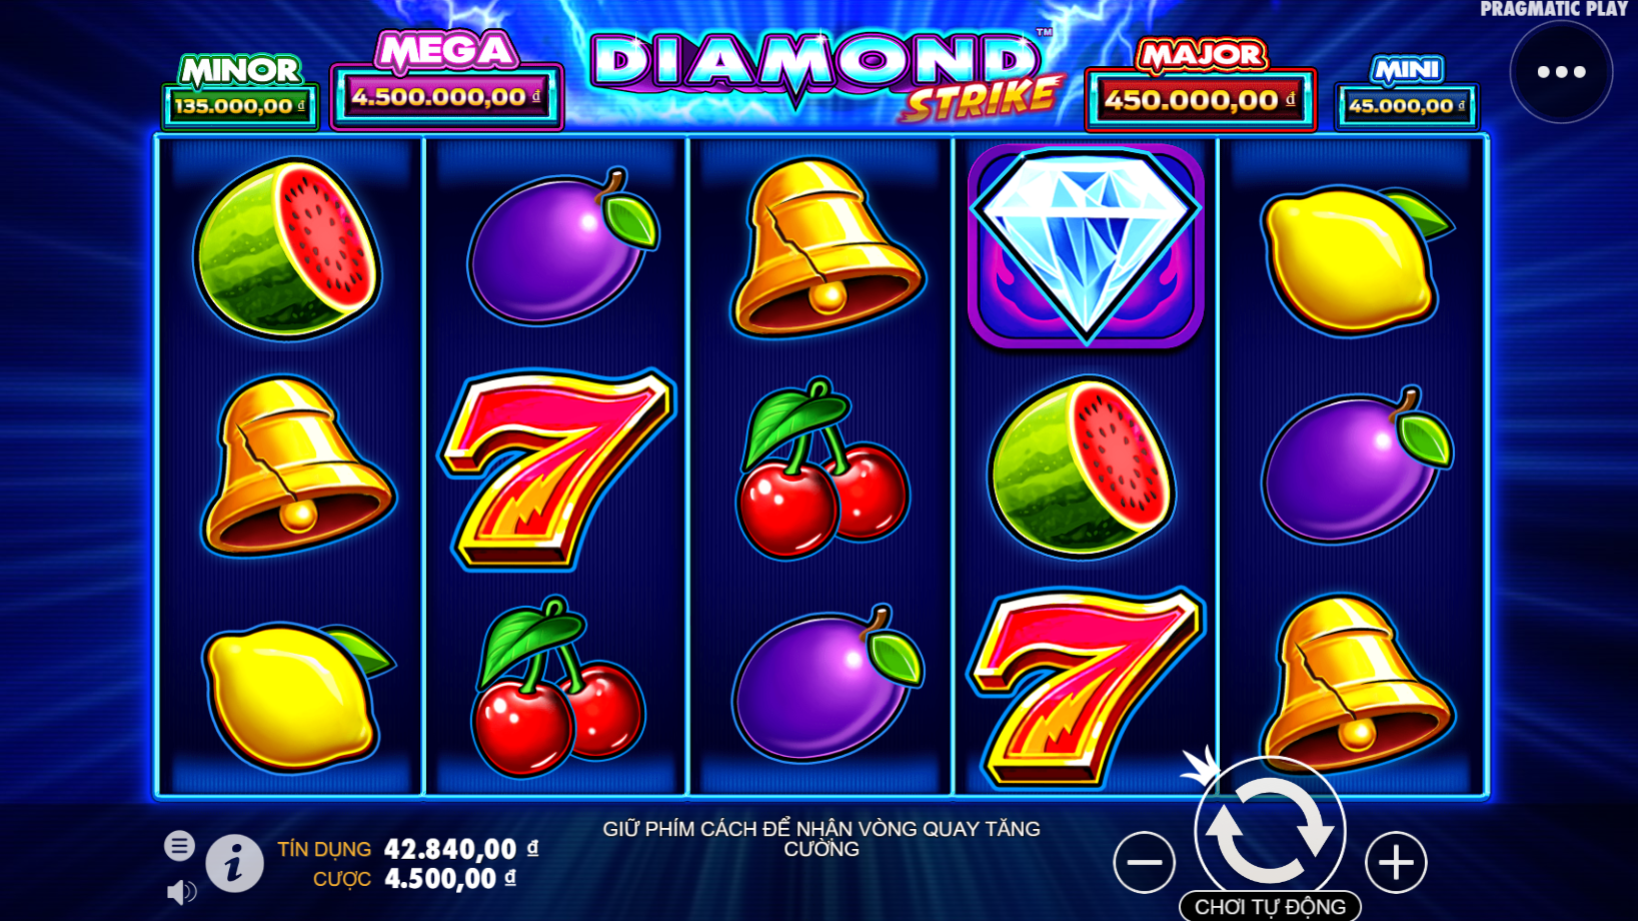 Giới thiệu về game Diamond Strike